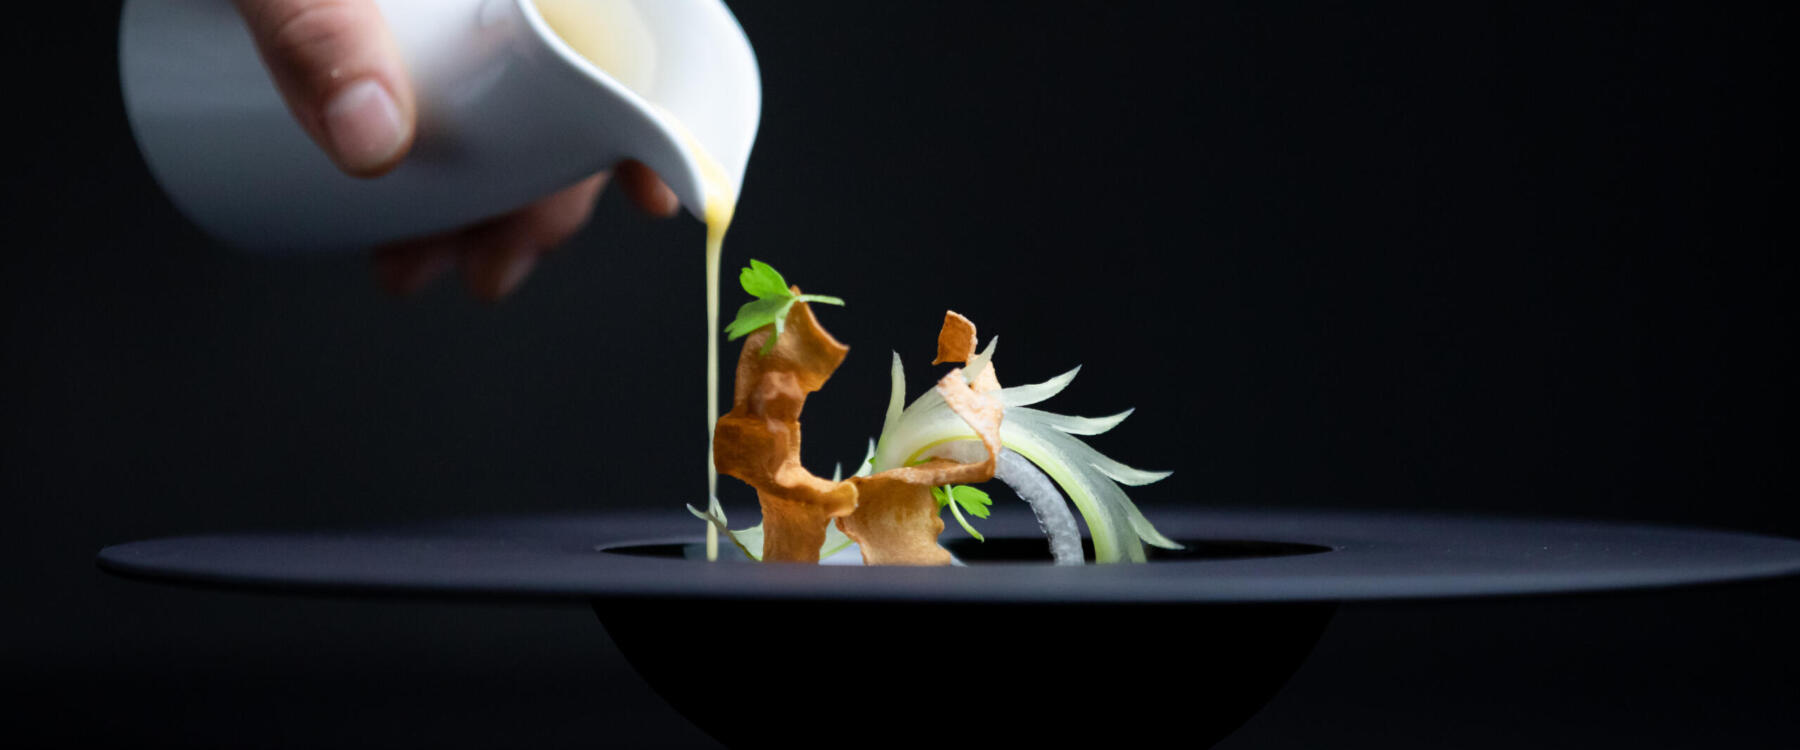 Chef-Duffys-chestnut-pork-cheek.-Buddhas-hand-celery-Photo-by-Michael-Muser